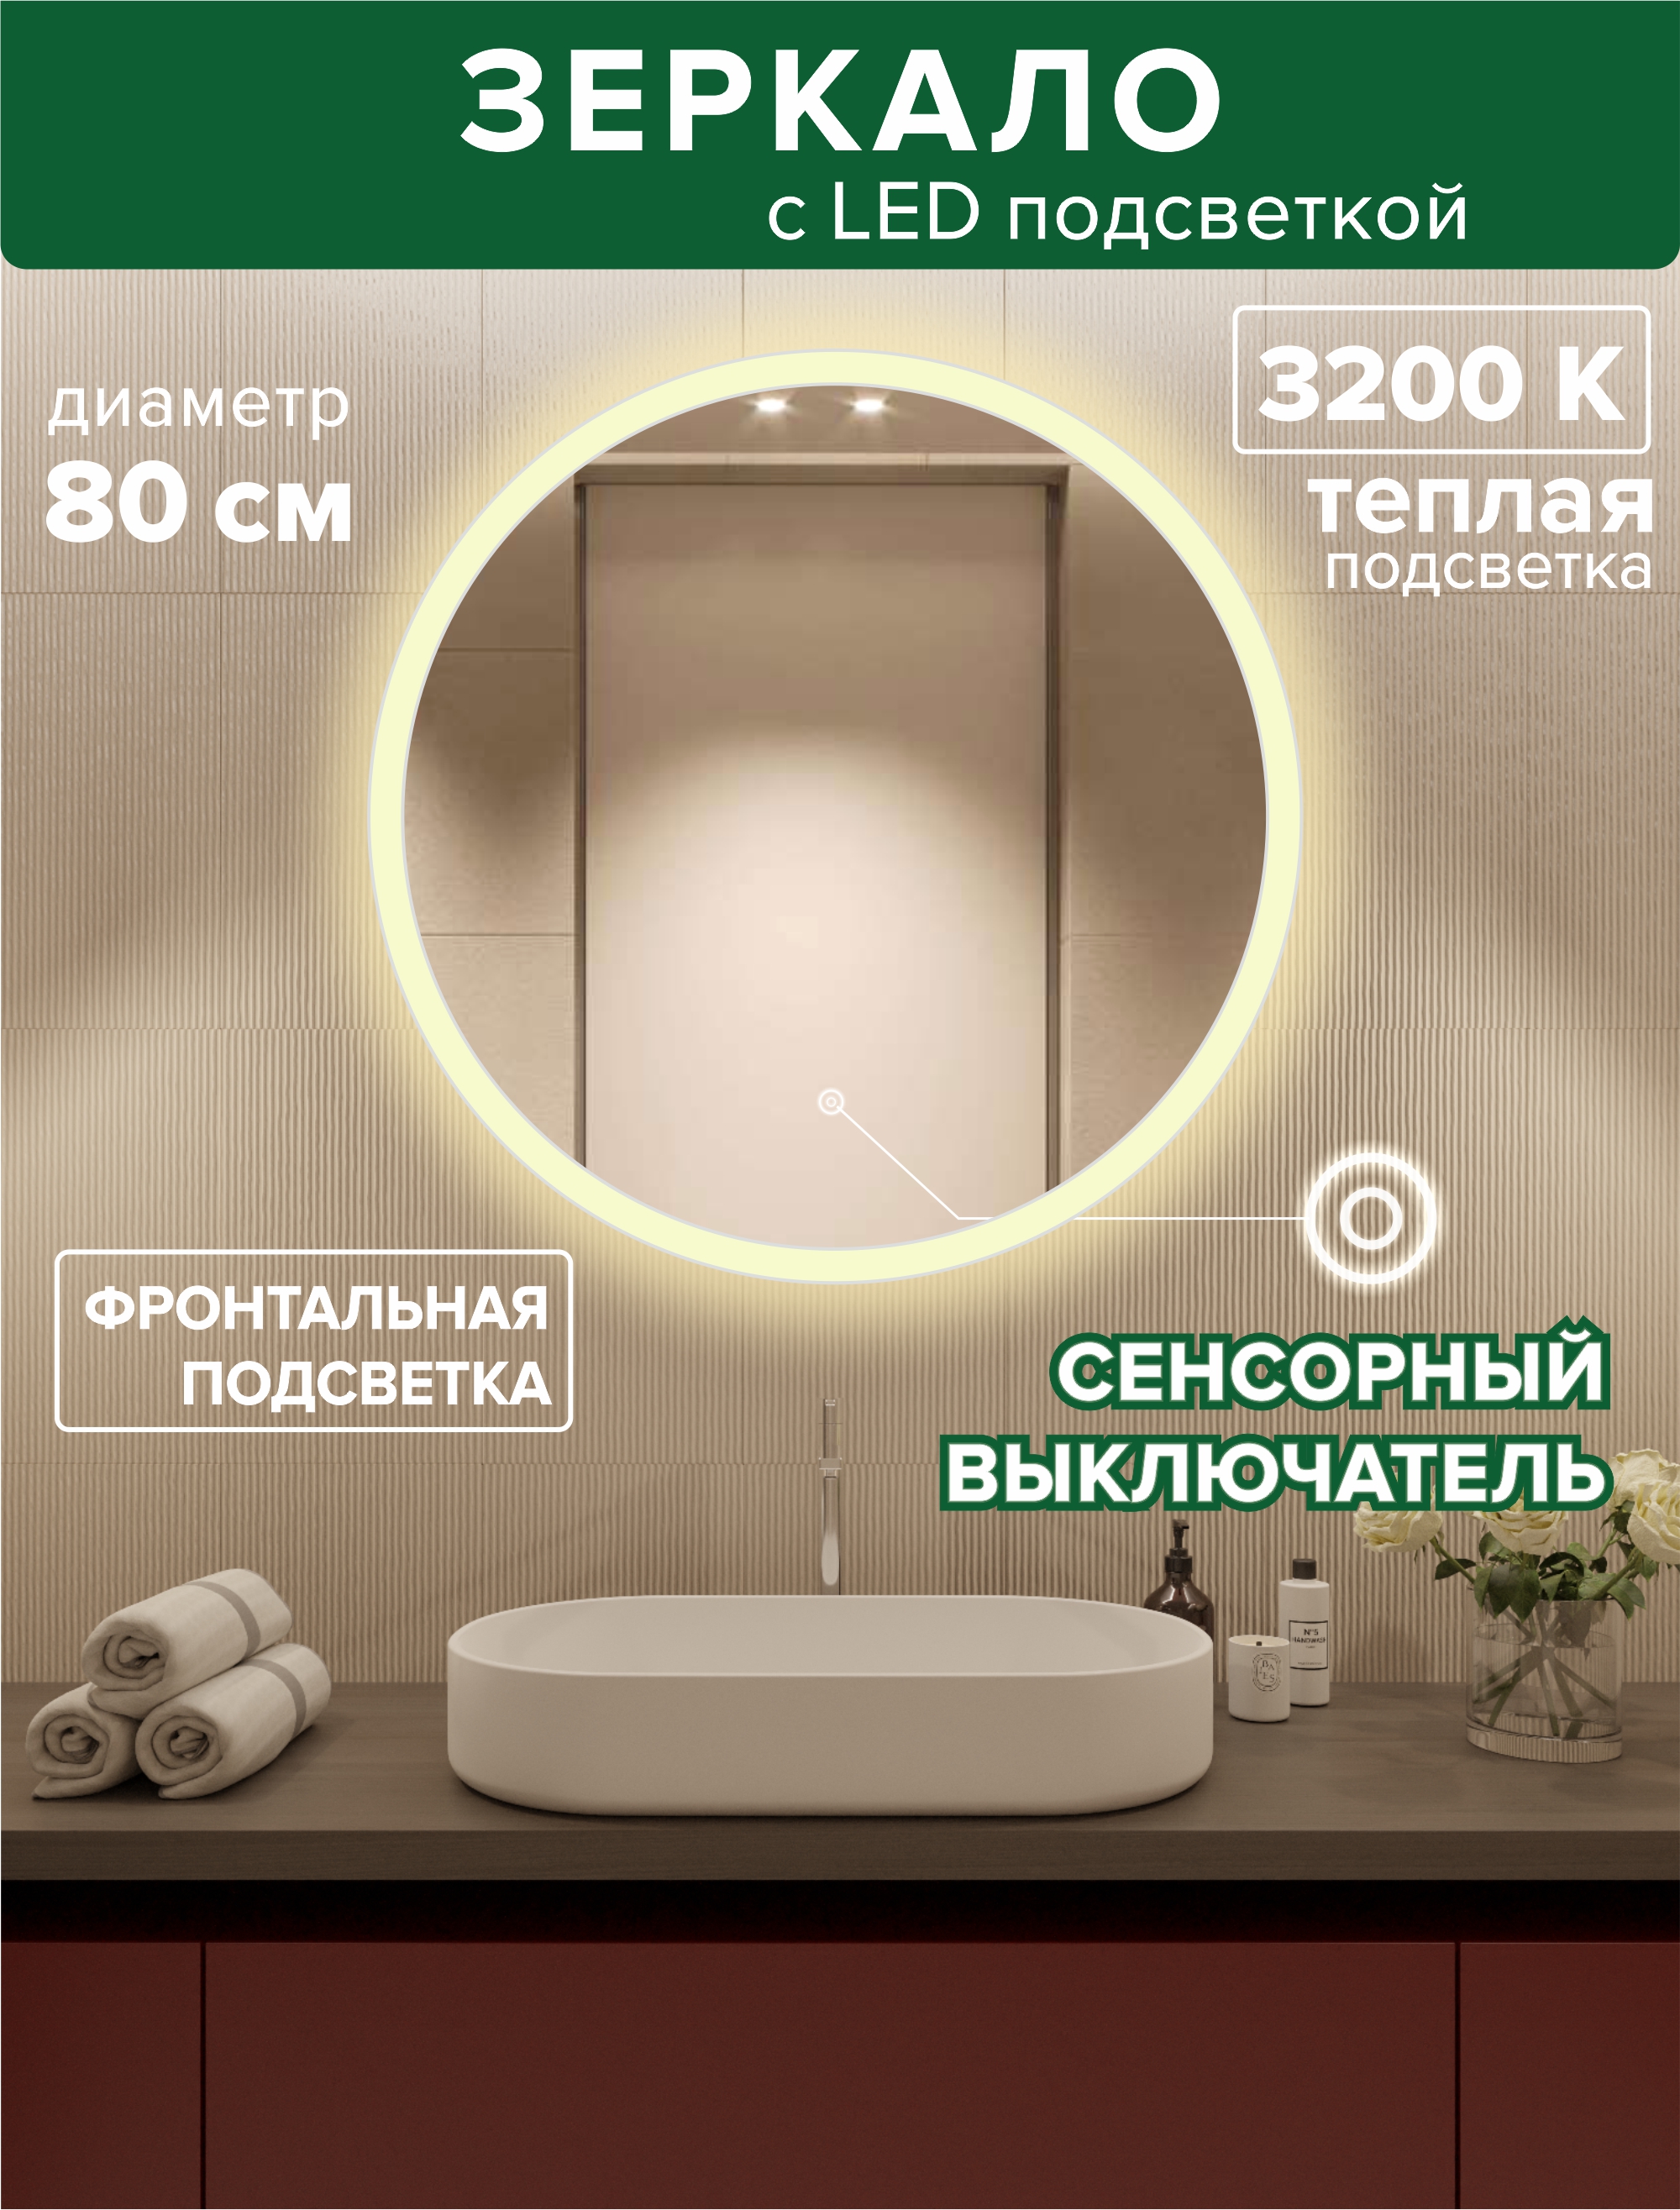 Зеркало для ванной Alfa Mirrors фронтальная теплая подсветка 3200К, круглое 80см, MSvet-8t led plr 200 20m 24v ww bl w o белая теплая провод соединяемая без силового шнура 24вольта